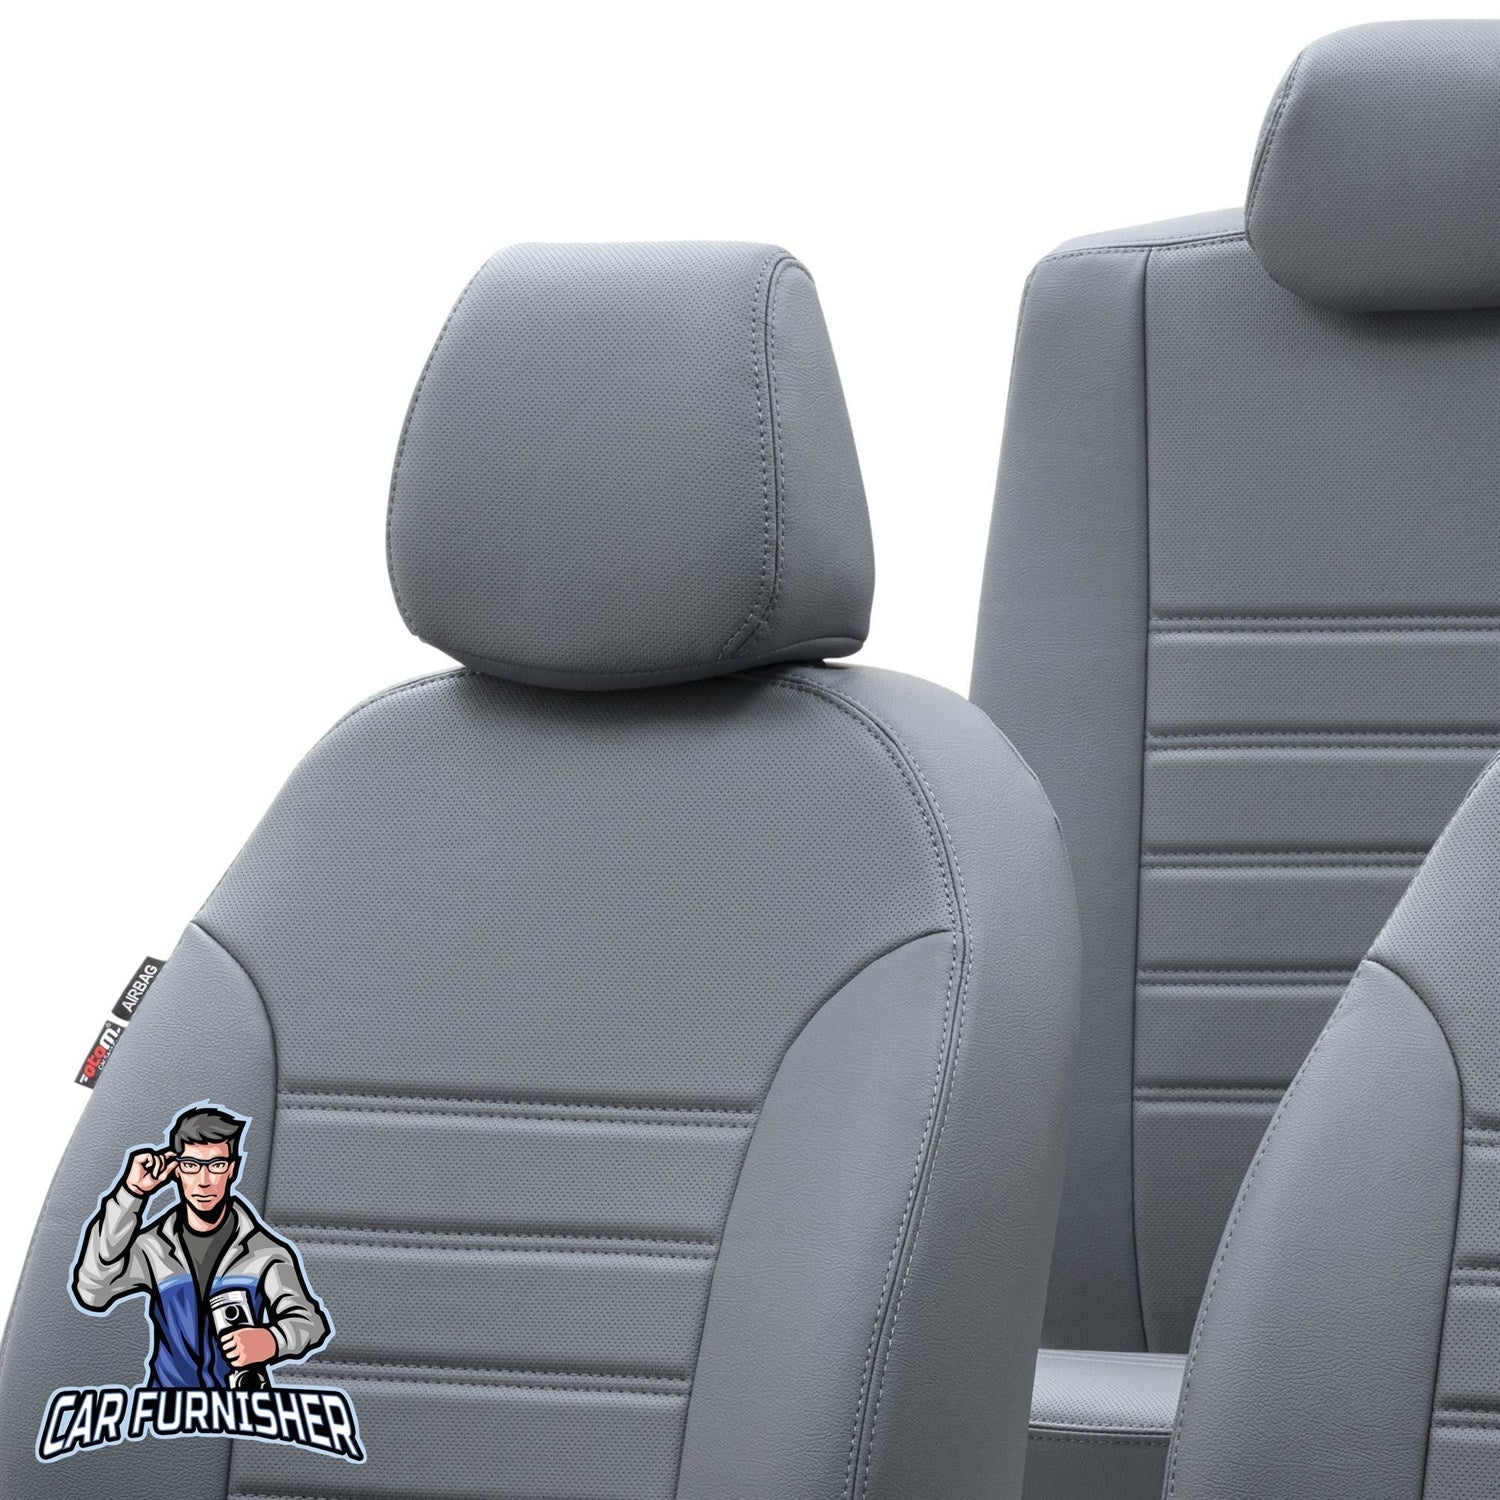 Suzuki Swift Seat Covers Istanbul Leather Design Smoked Leather